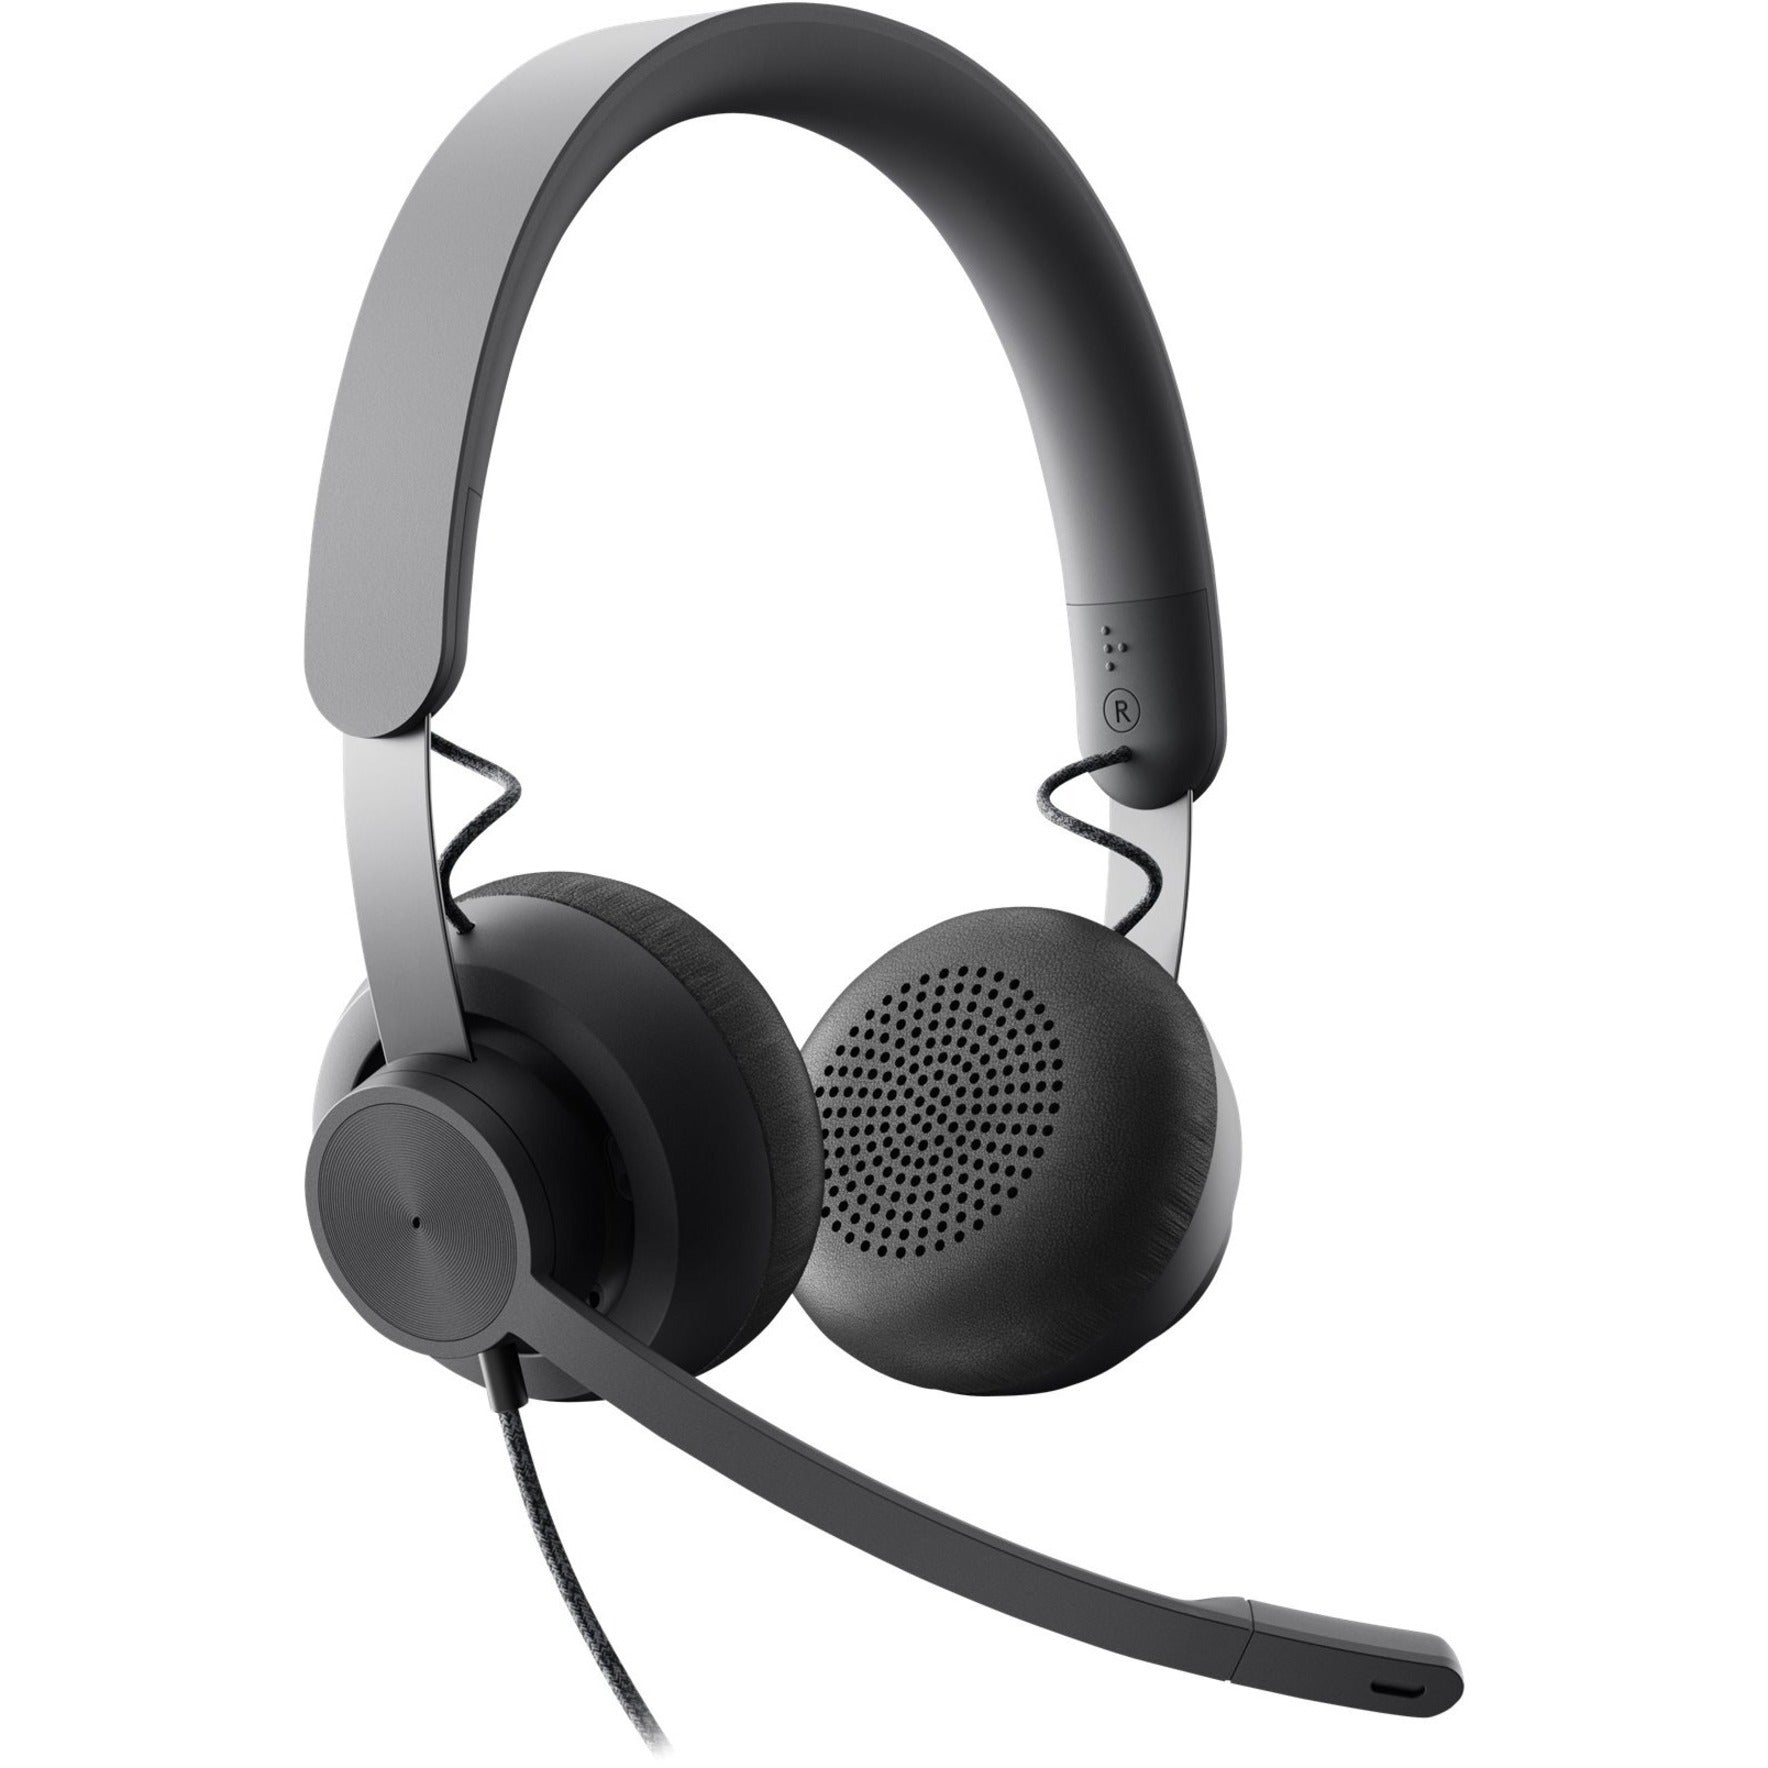 Logitech 981-000871 Zone Headset, USB Type C, 2 Year Warranty, Comfortable, Stereo Sound